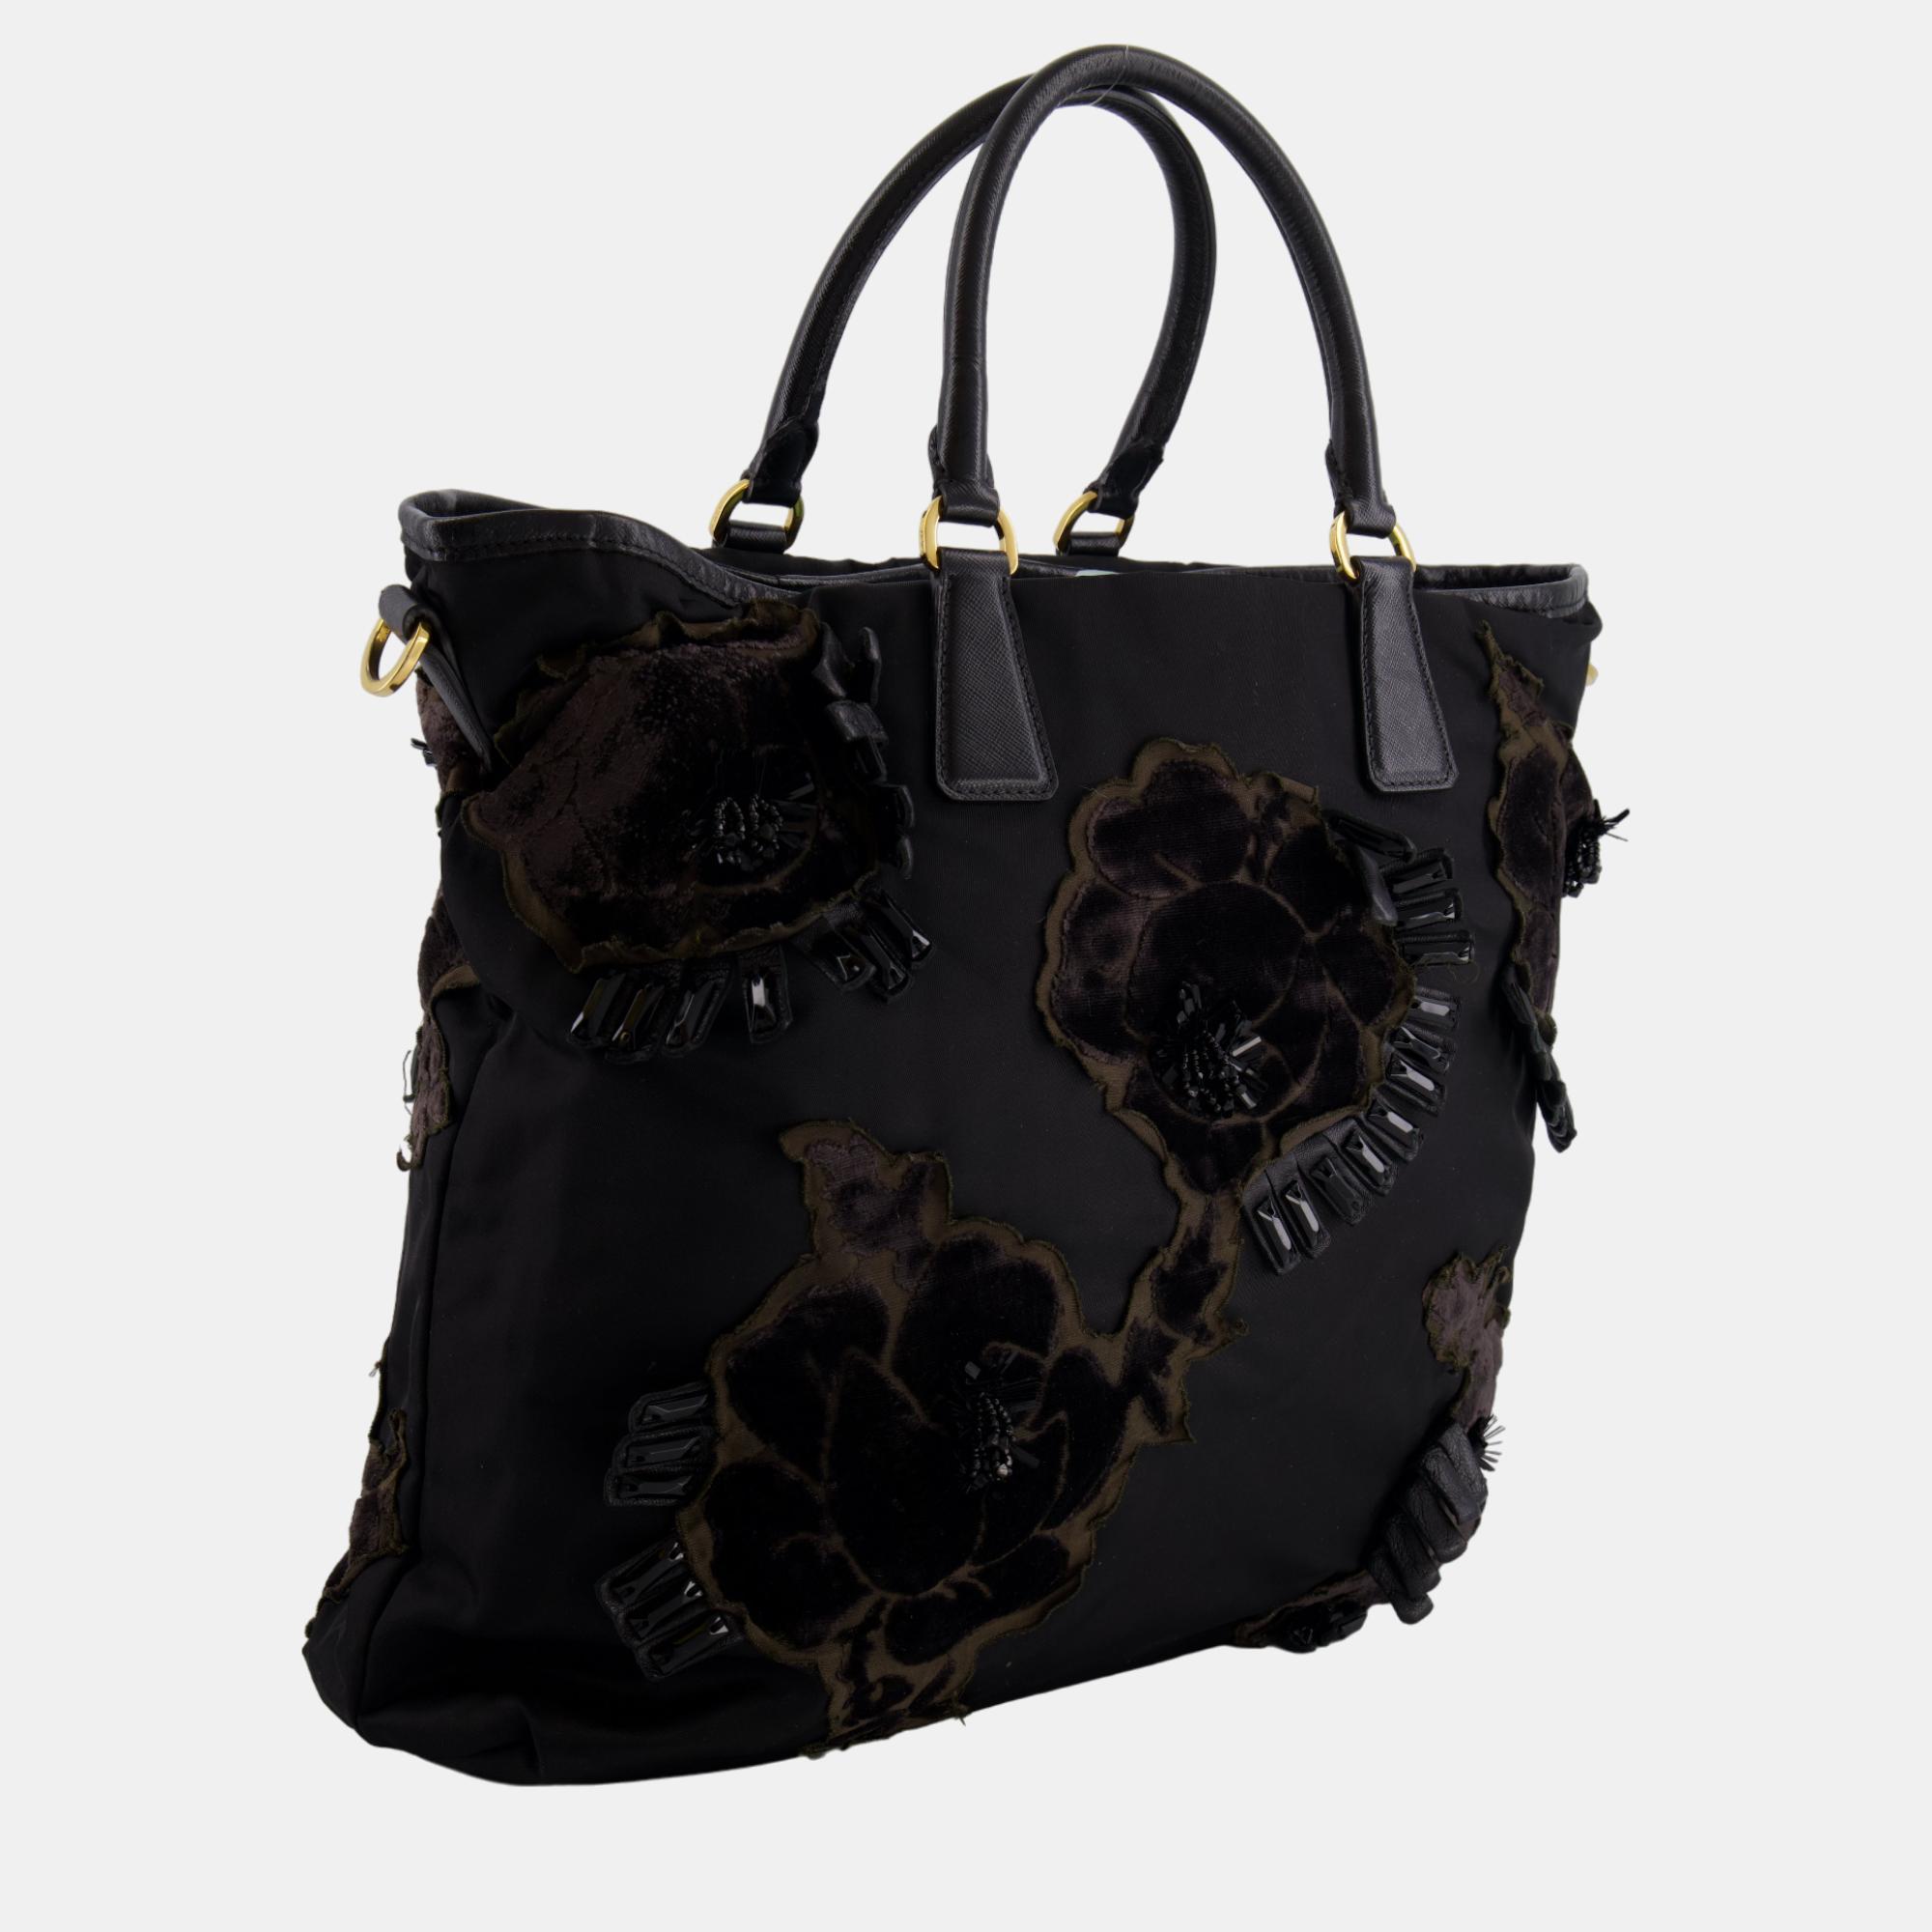 Prada Black Nylon Tote Bag With Gold Hardware, Velvet And Crystal Embroideries